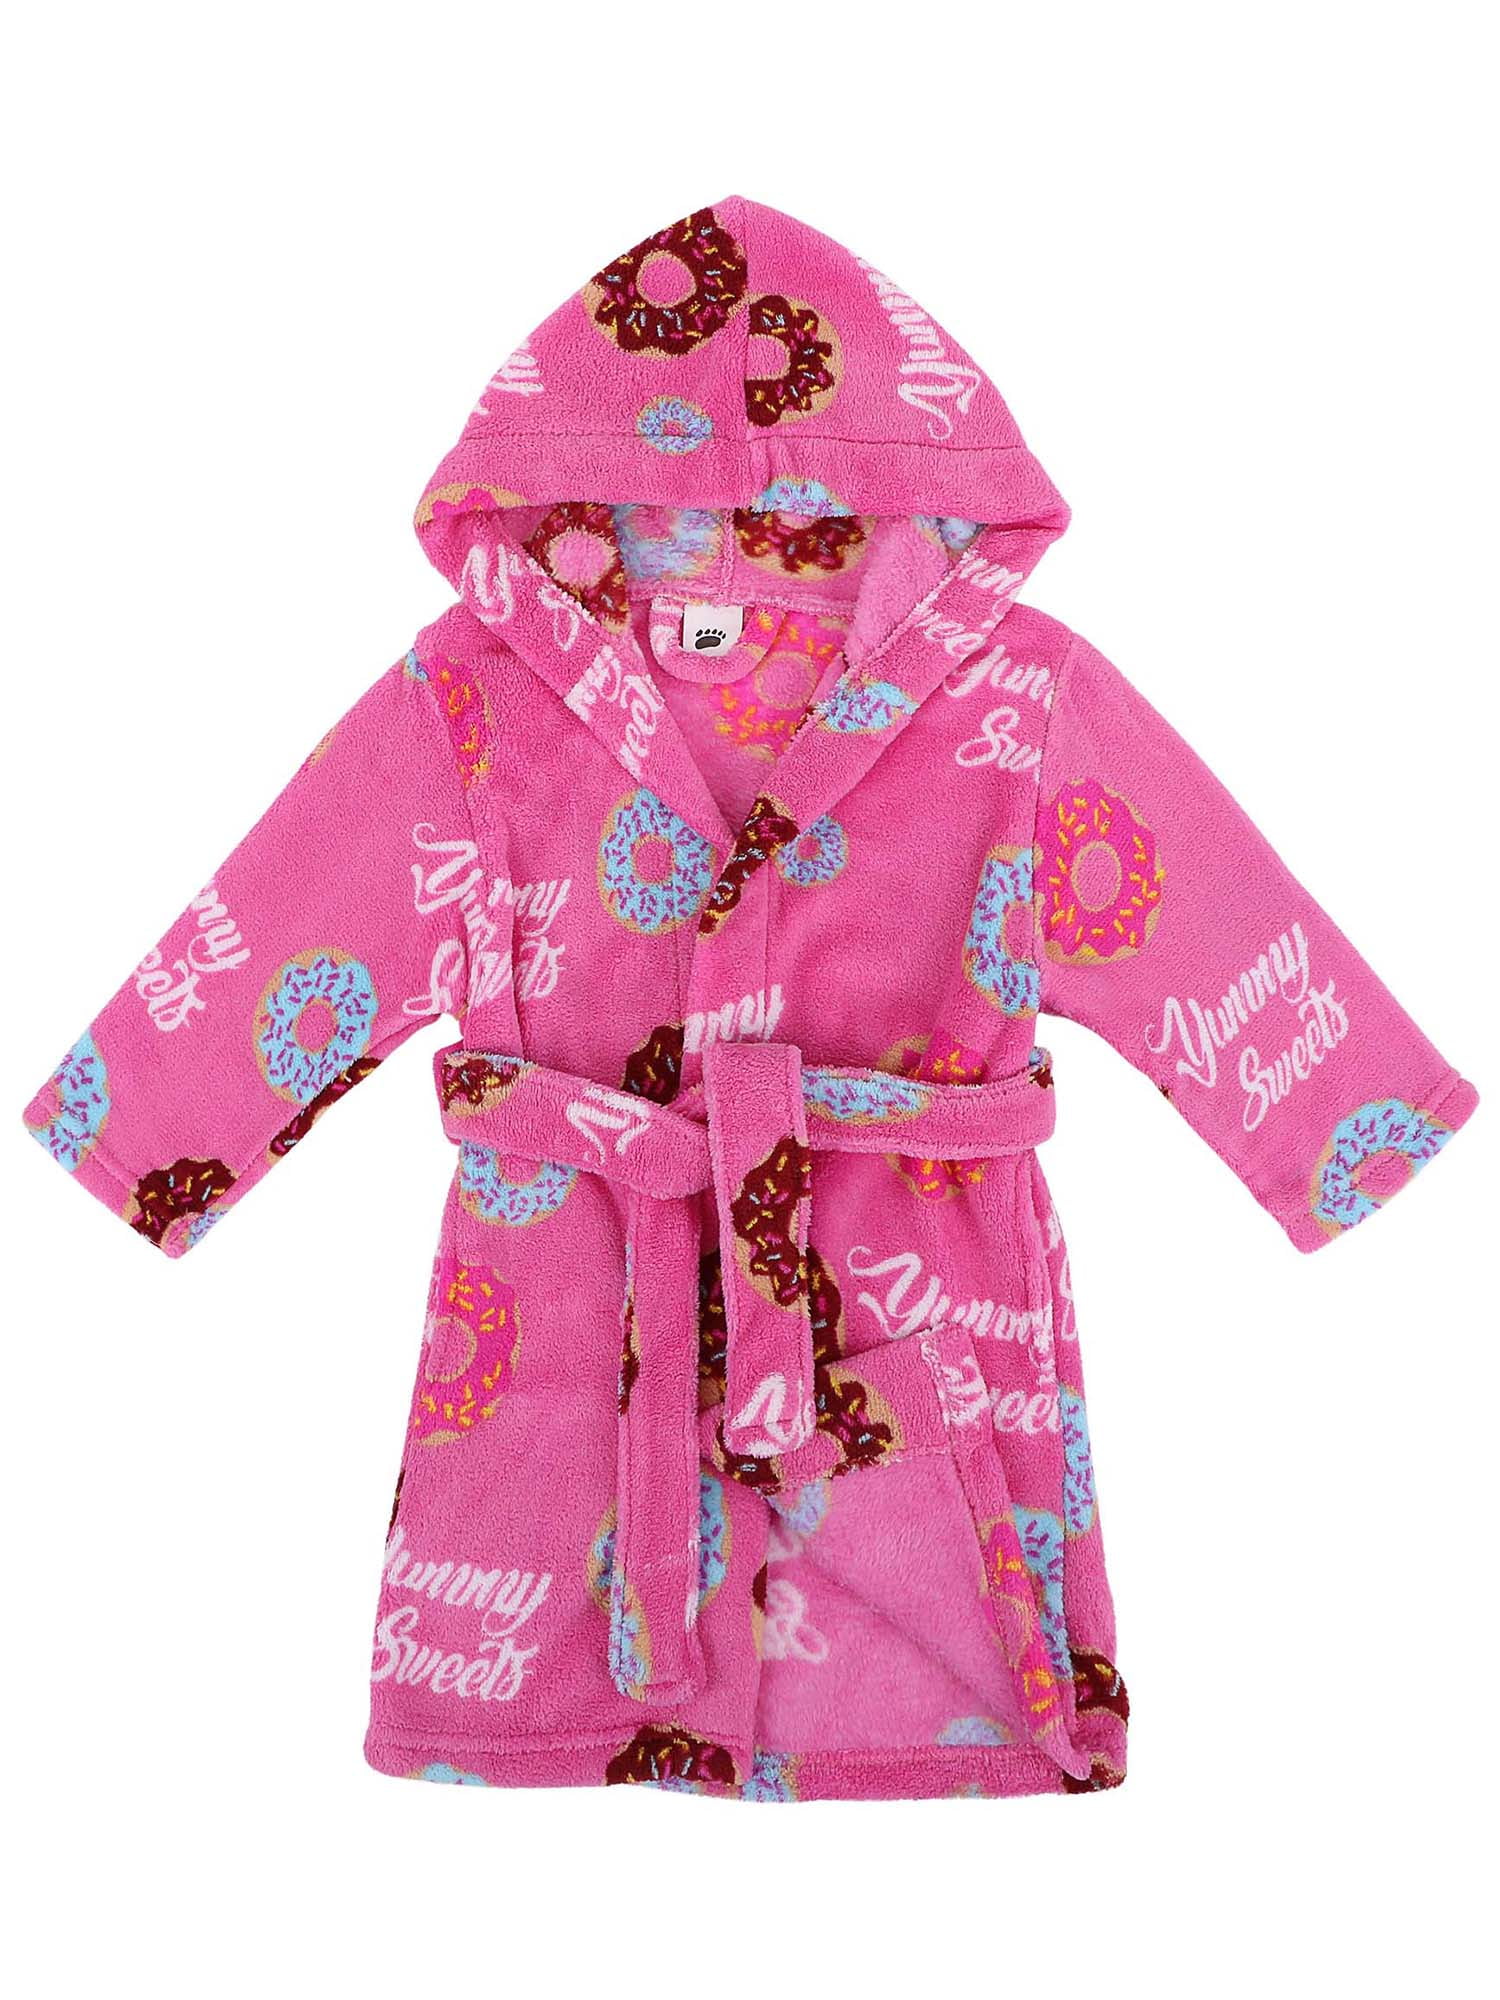 Simplicity - Children Hooded Printed Flannel Fleece Bathrobe Girls Robe  with Pockets,Donut,XL - Walmart.com - Walmart.com